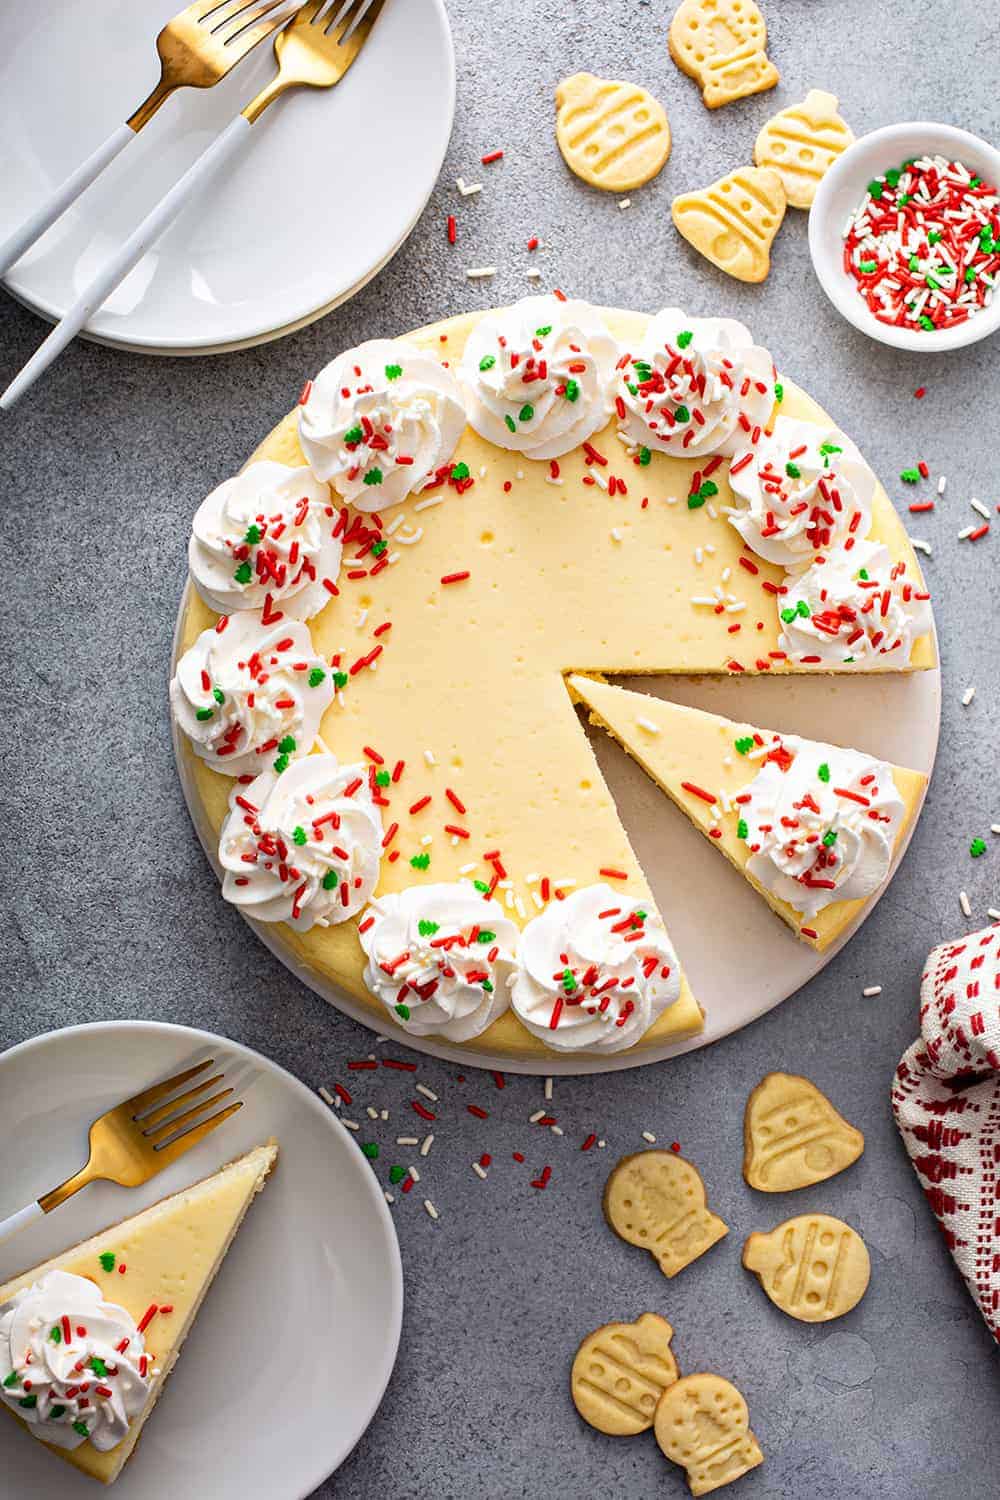 https://www.mybakingaddiction.com/wp-content/uploads/2015/12/sliced-sugar-cookie-cheesecake.jpg